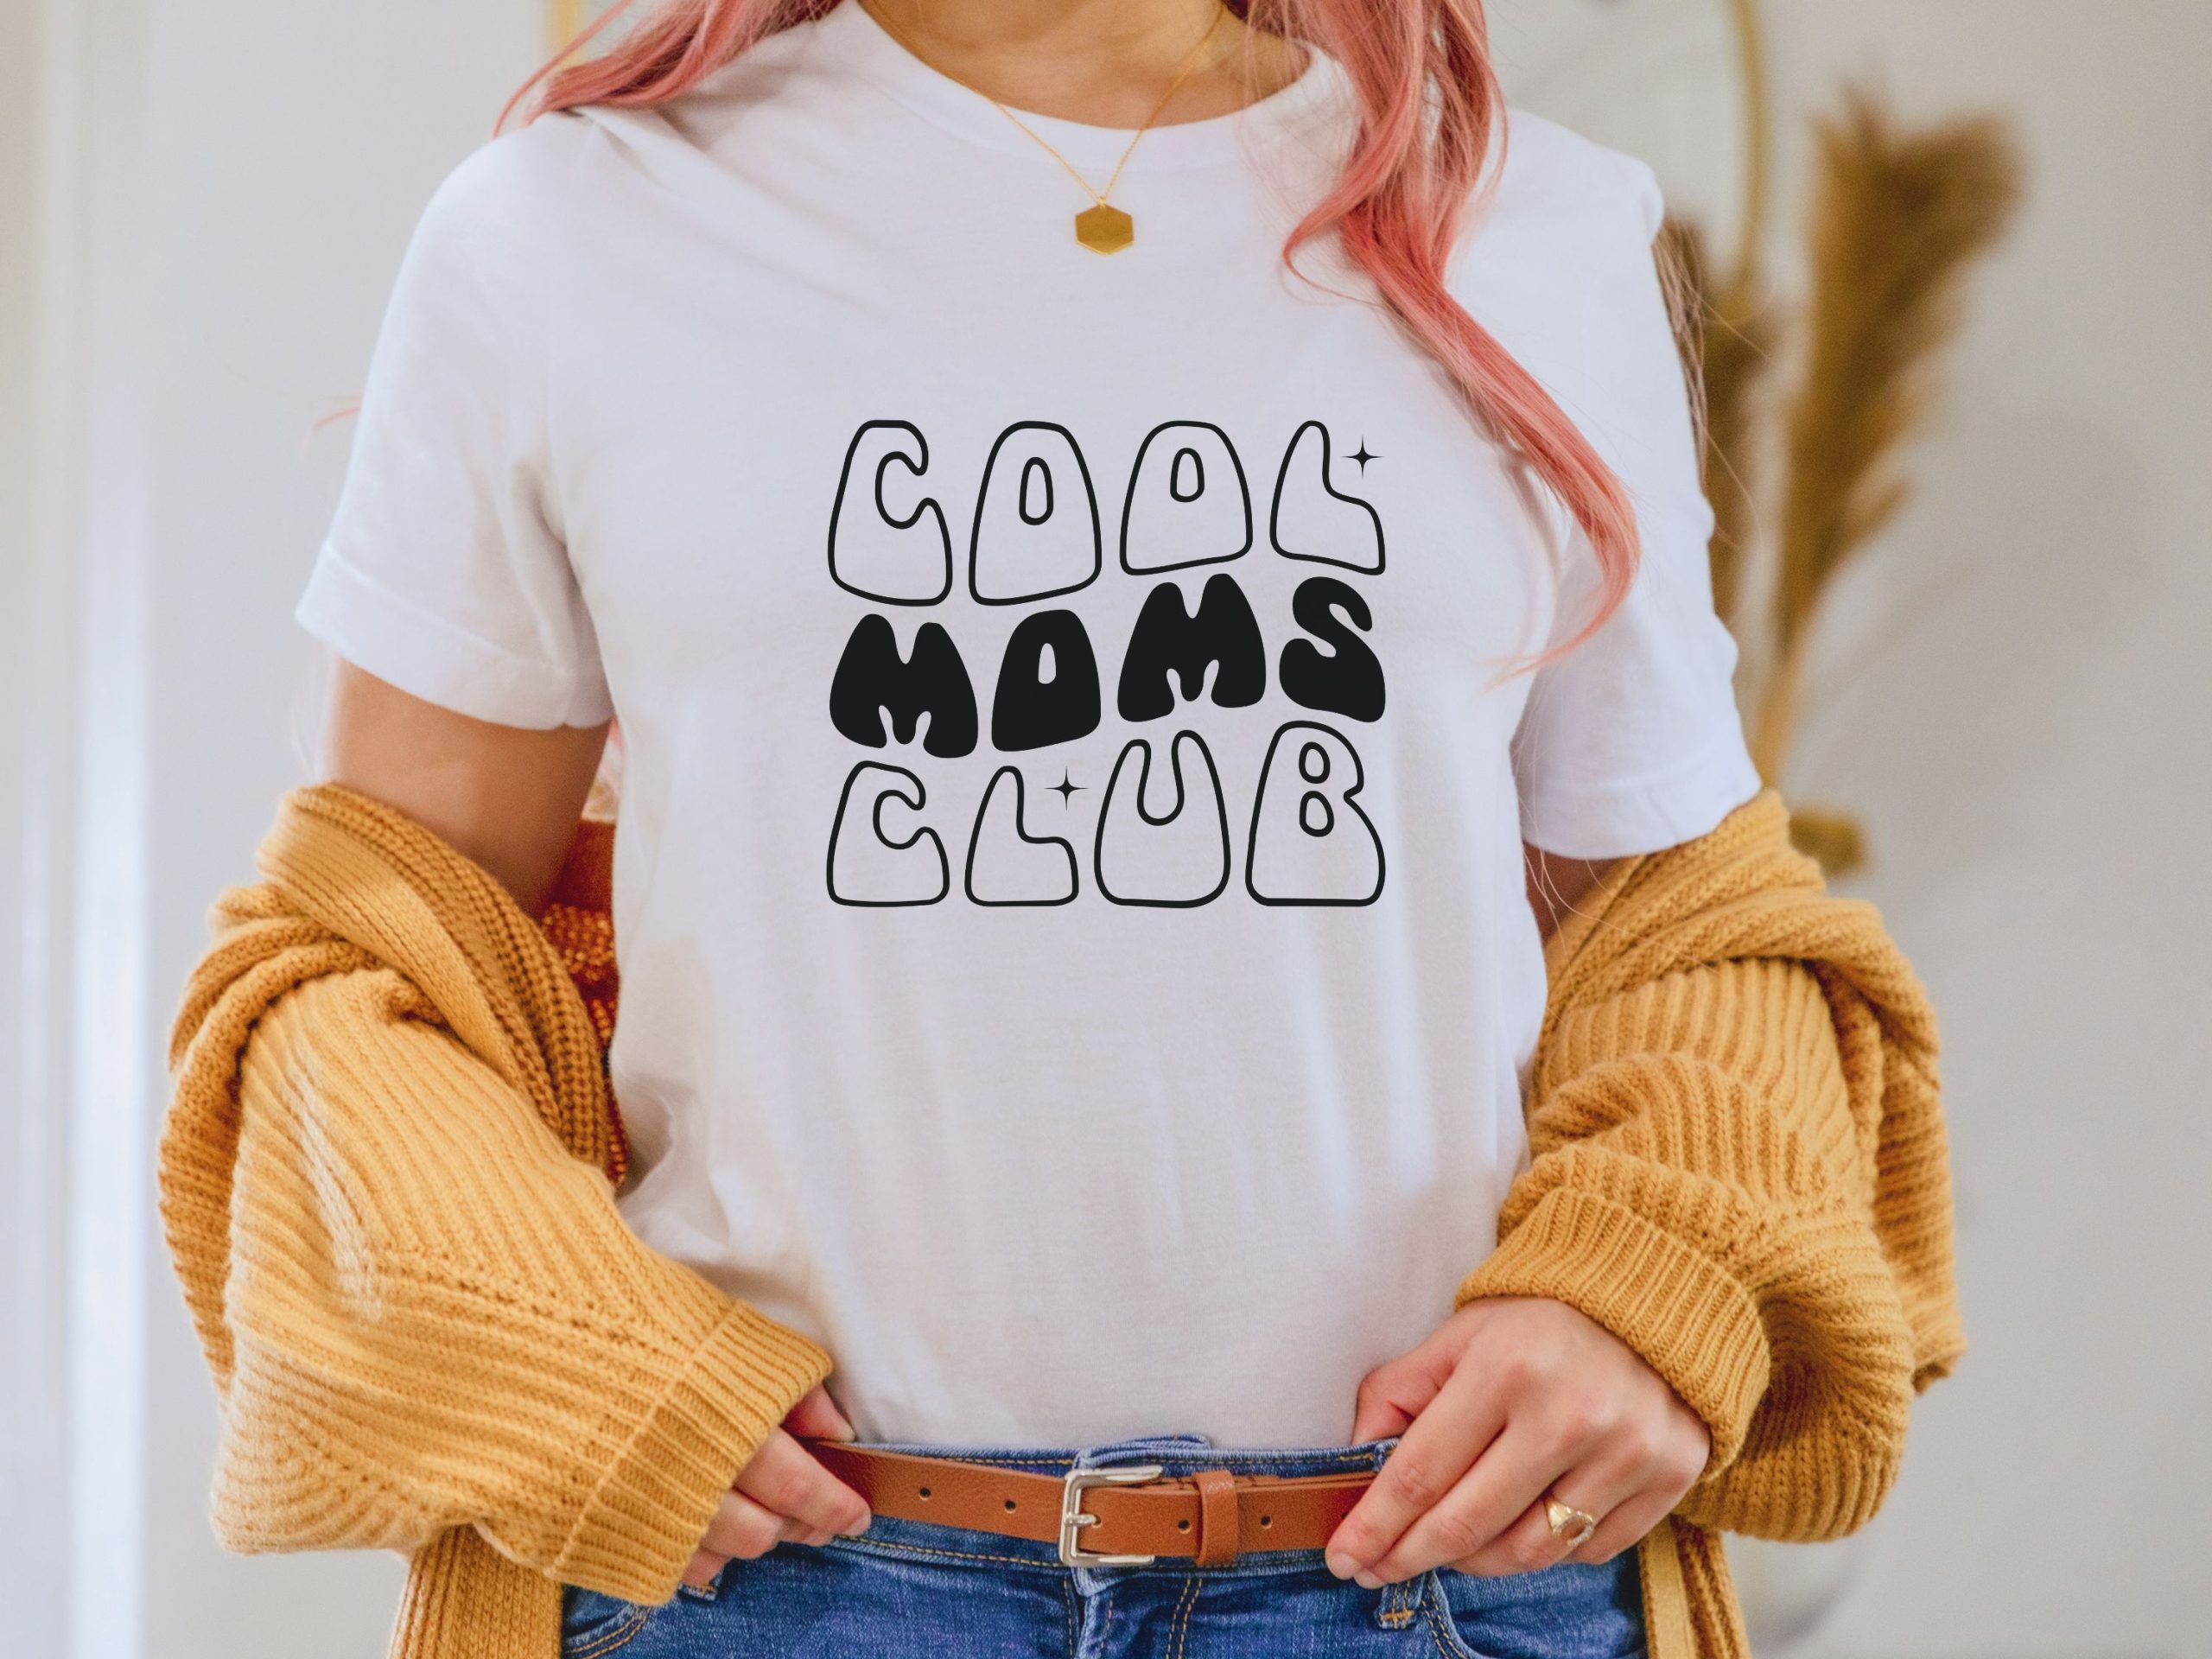 Cool moms club shirt, Happy Mothers day shirt gift, Retro womens tee